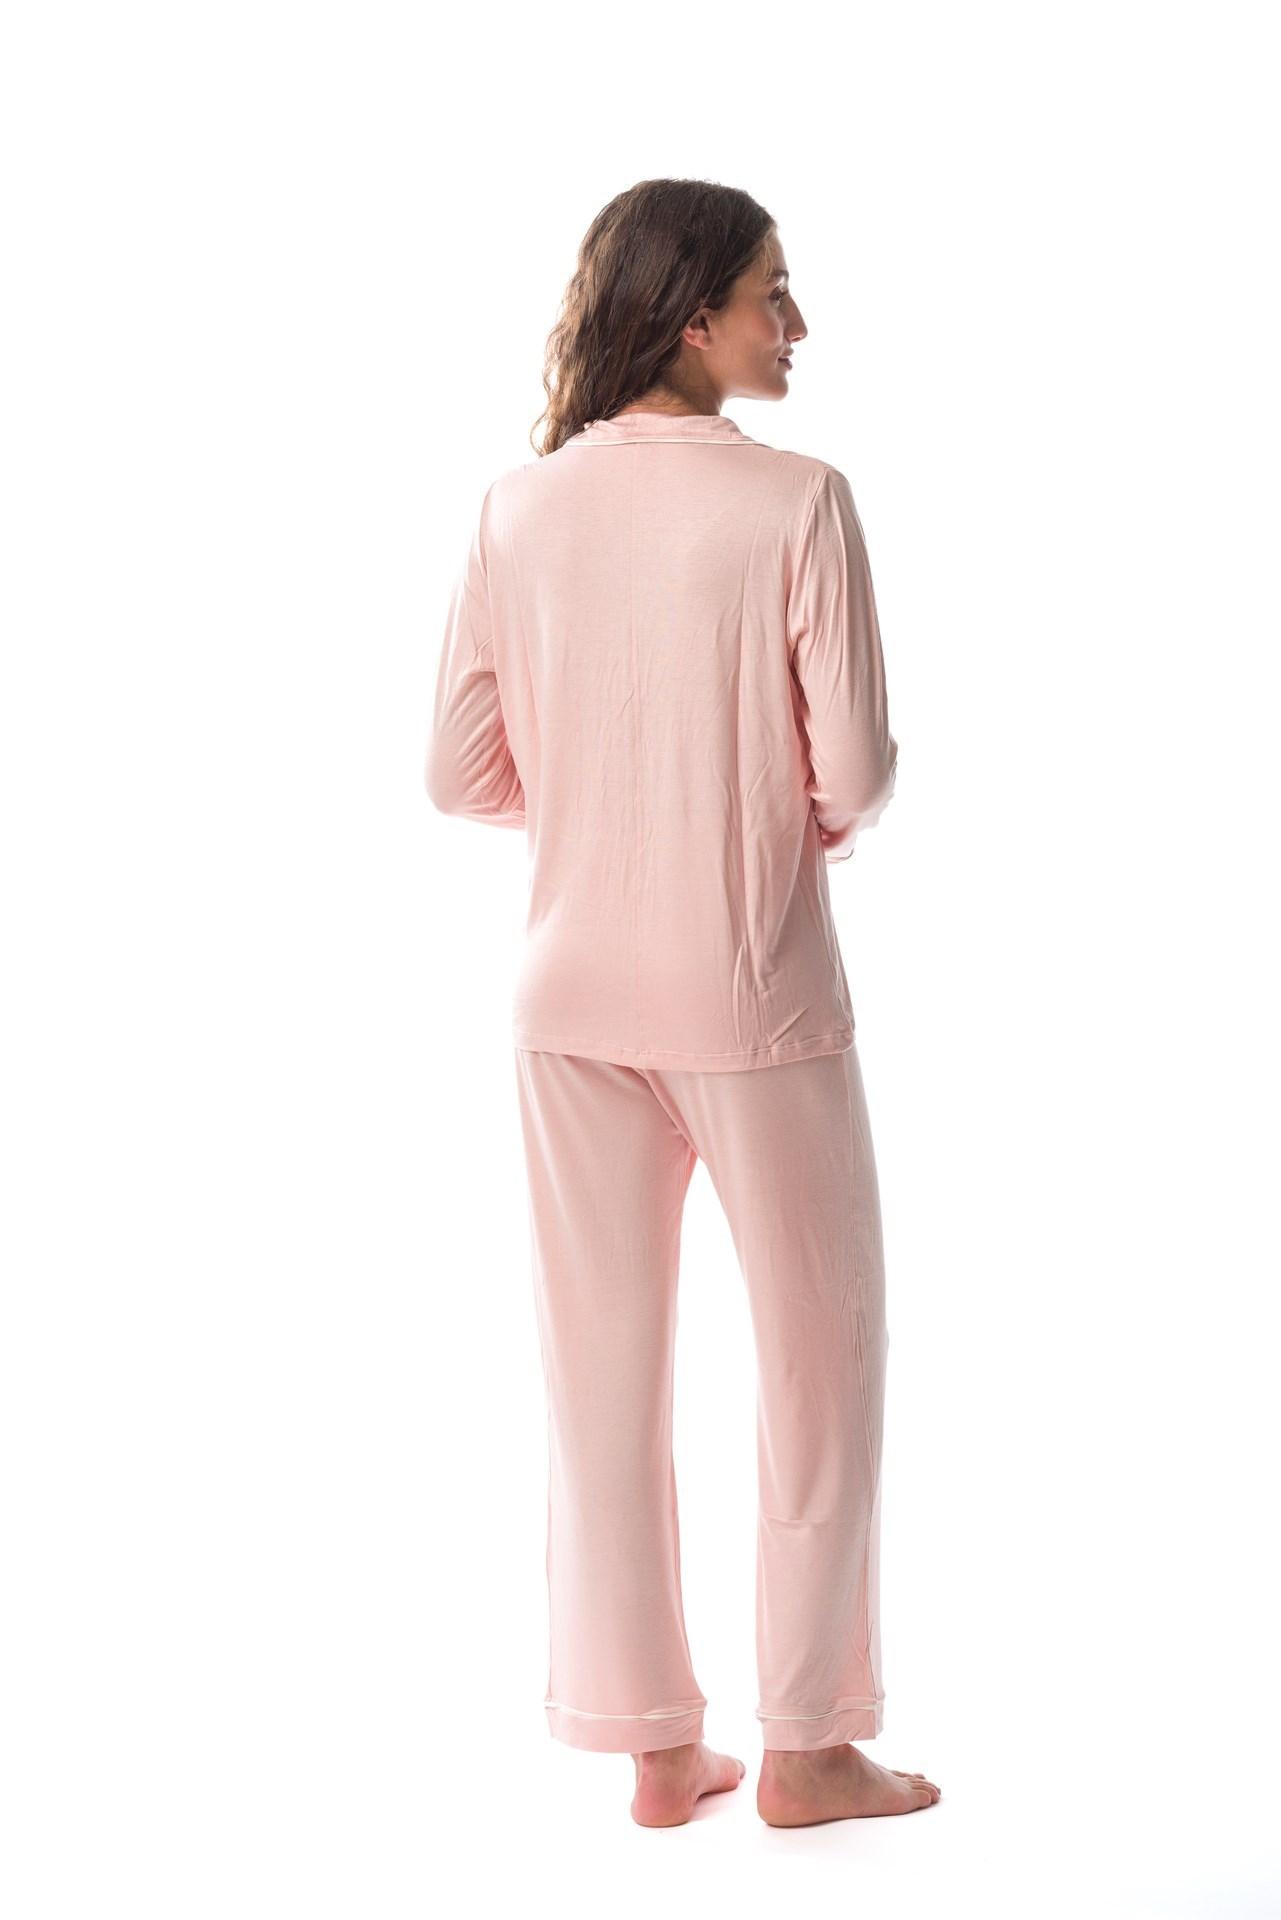 Donatella - Pijama Camisero Largo rosado pastel m